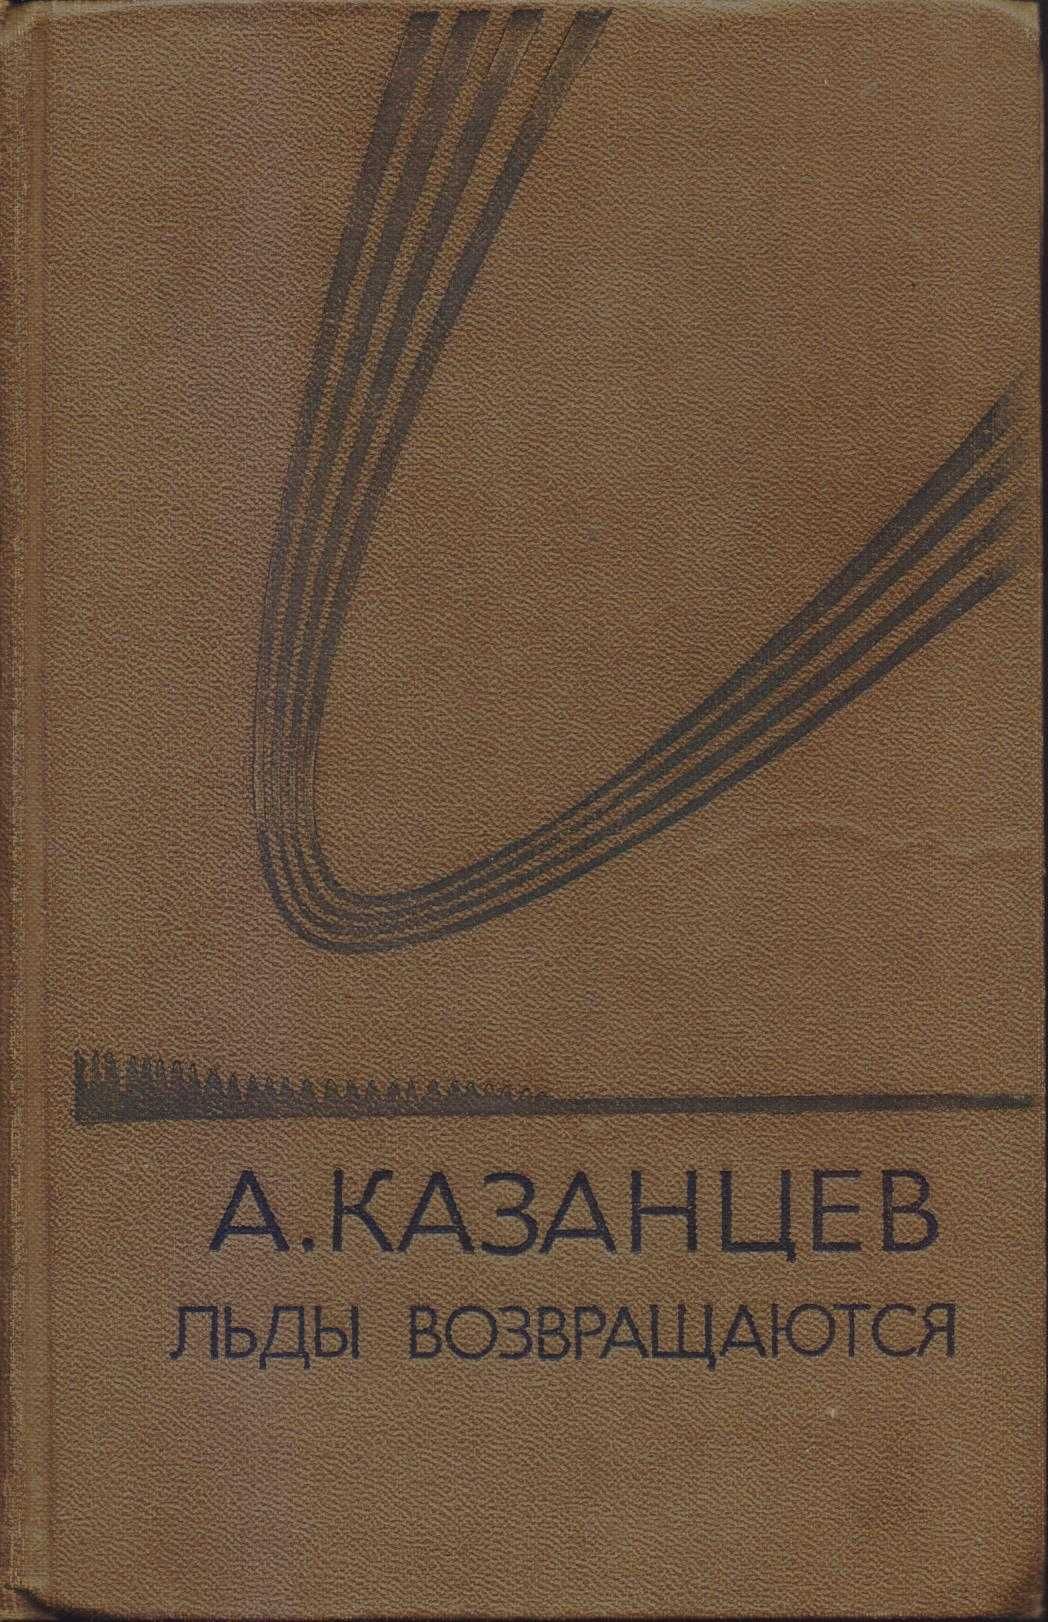 Александр Казанцев, фантастика (7 книг), 1978-1986г, состояние хорошее